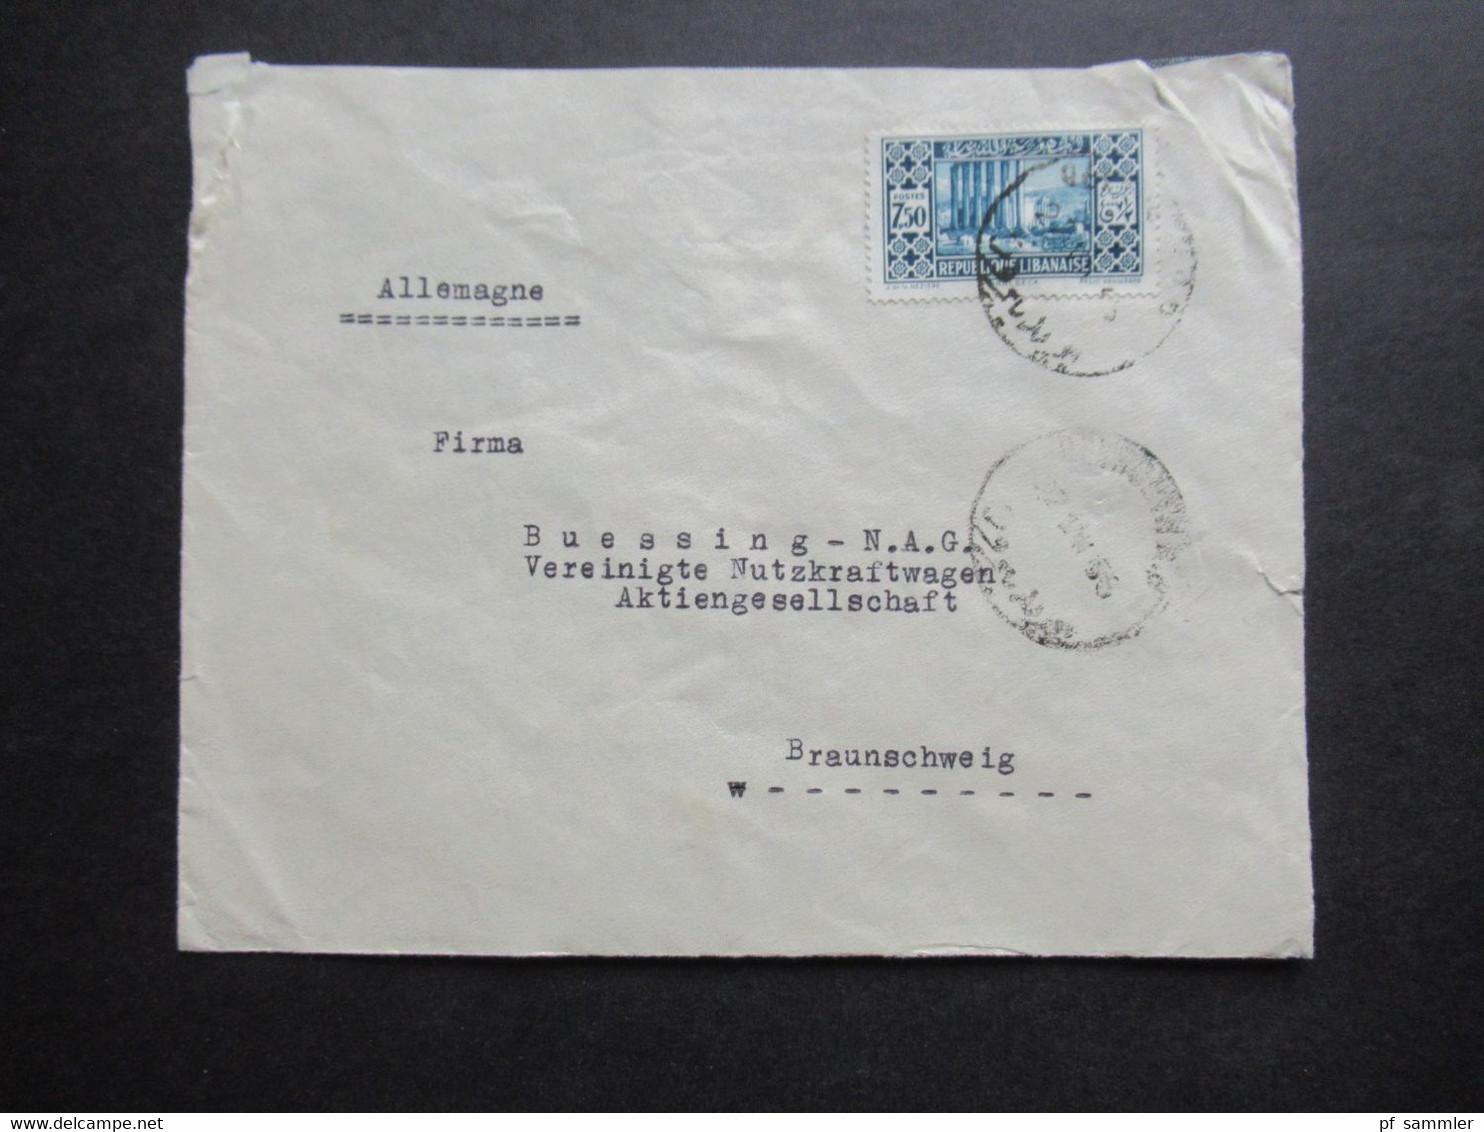 Republique Libanaise 1935 Libanon Umschlag Fankhaenel & Kronofol Beyrouth (Syrie) Aufkleber Soennecken Weltmarke - Libanon